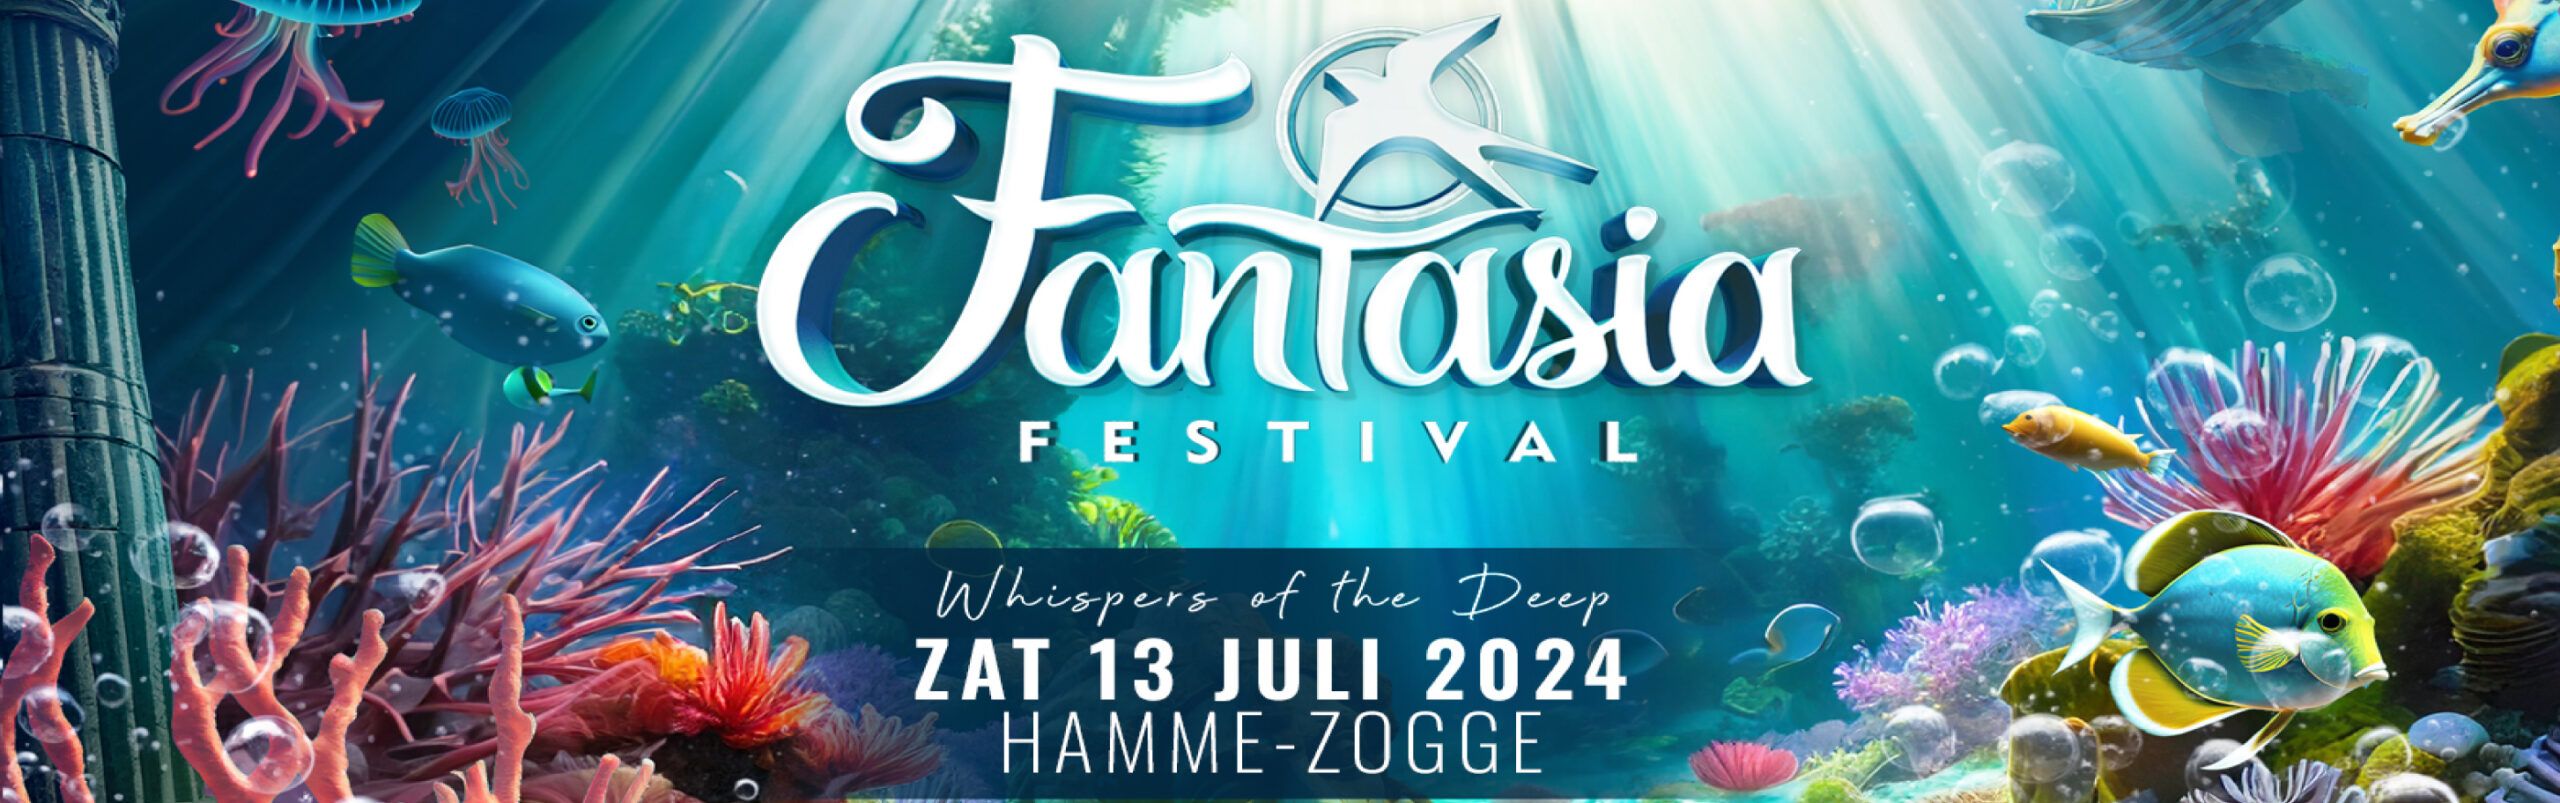 Fantasia Festival header